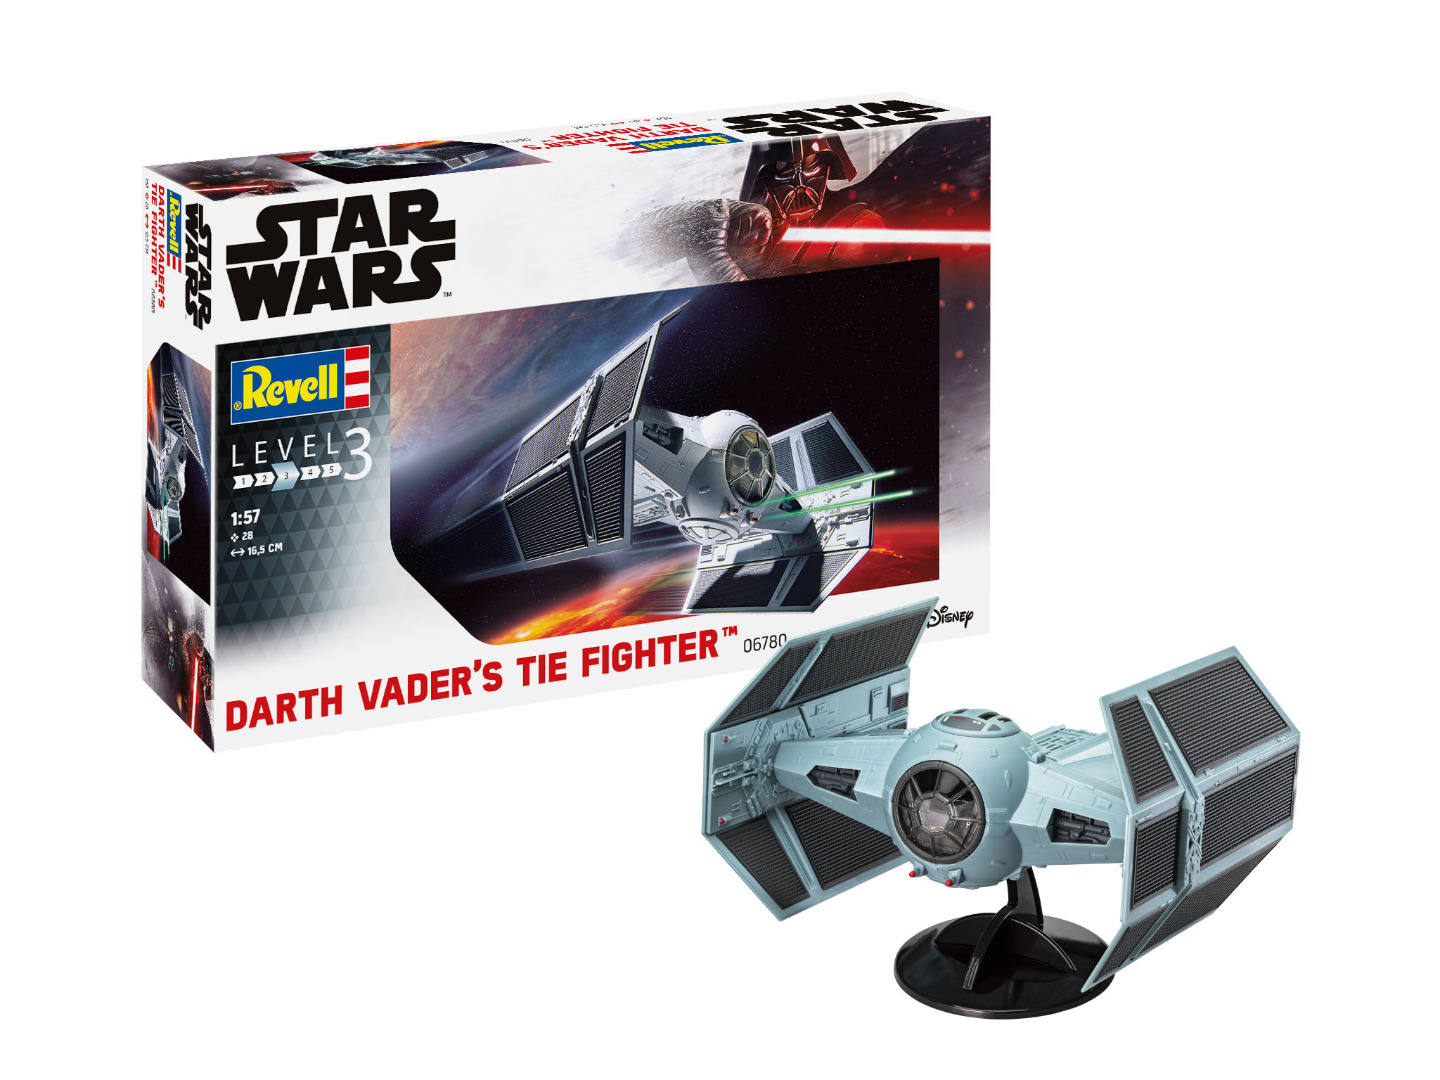 Revell Model Kit Star Wars Darth Vader's Tie Fighter Scale 1:57